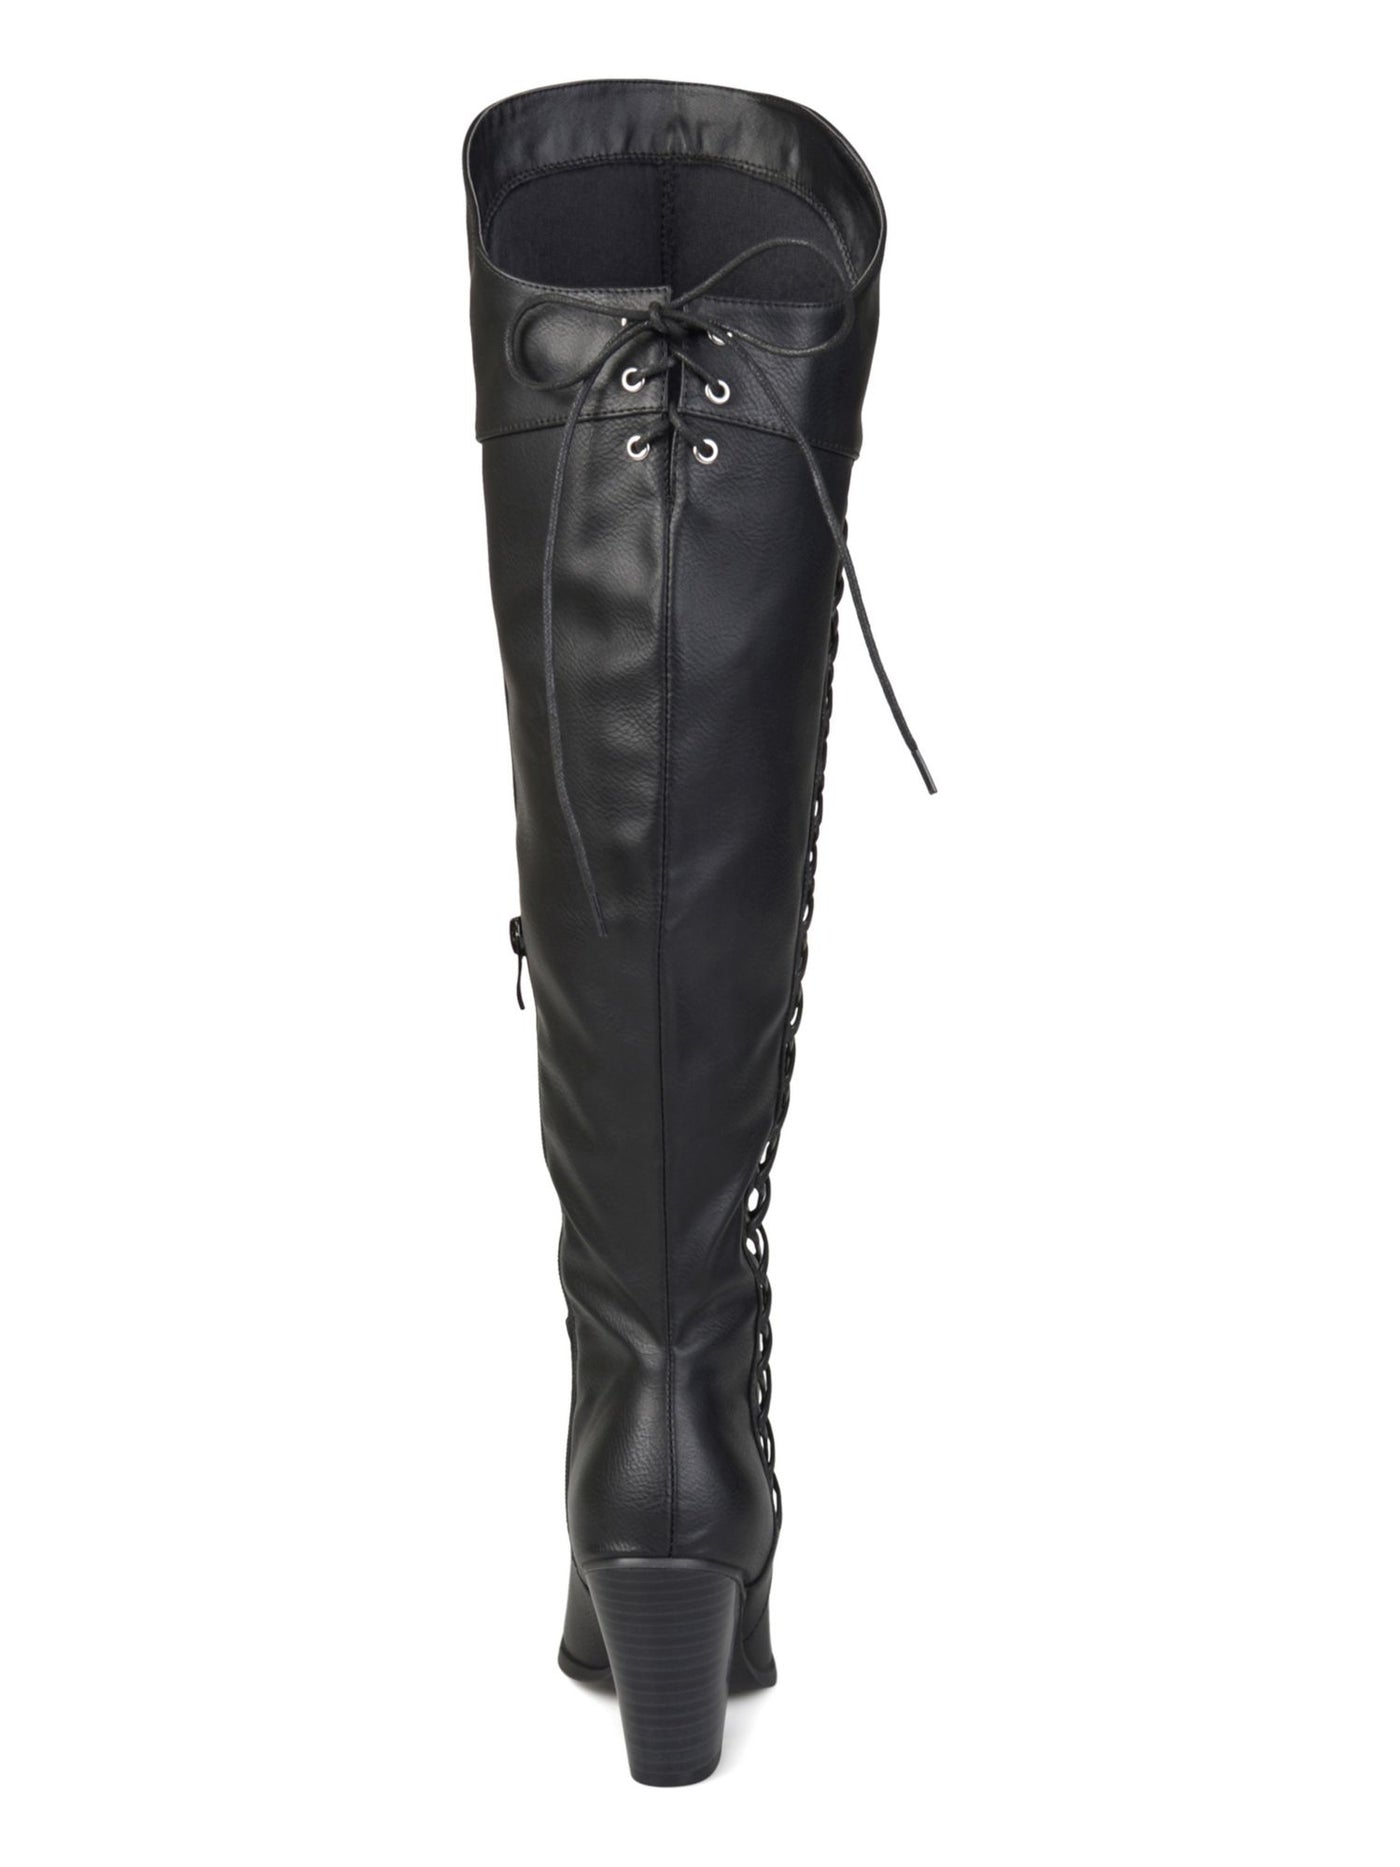 JOURNEE COLLECTION Womens Black Raised Vamp Lace Comfort Spritz Round Toe Block Heel Zip-Up Dress Boots 8 M